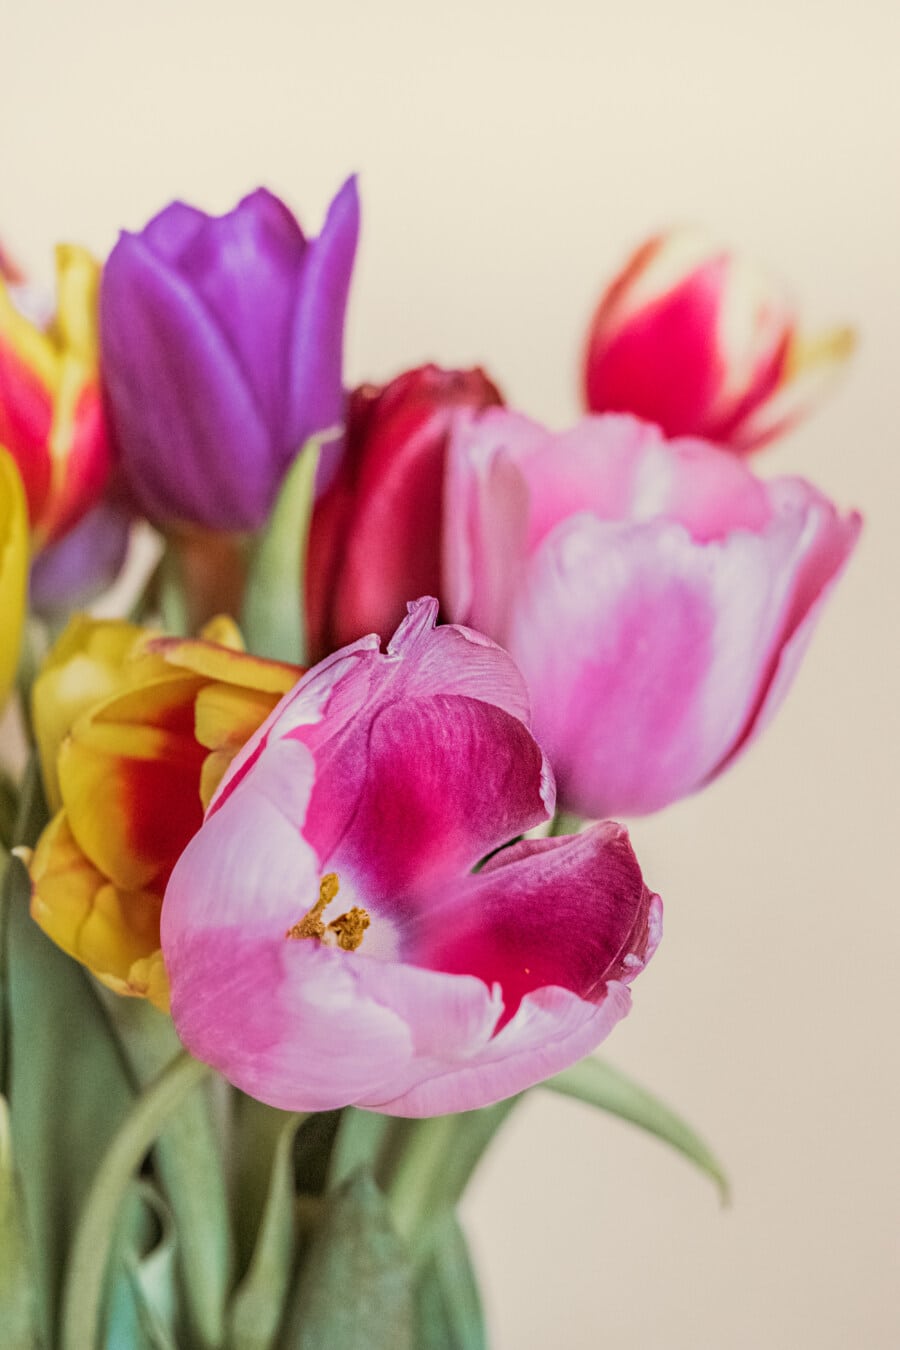 Tulip, karangan bunga, kemerah-merahan, kelopak bunga, Gugus, bunga, bunga tulp, musim semi, bunga, mekar